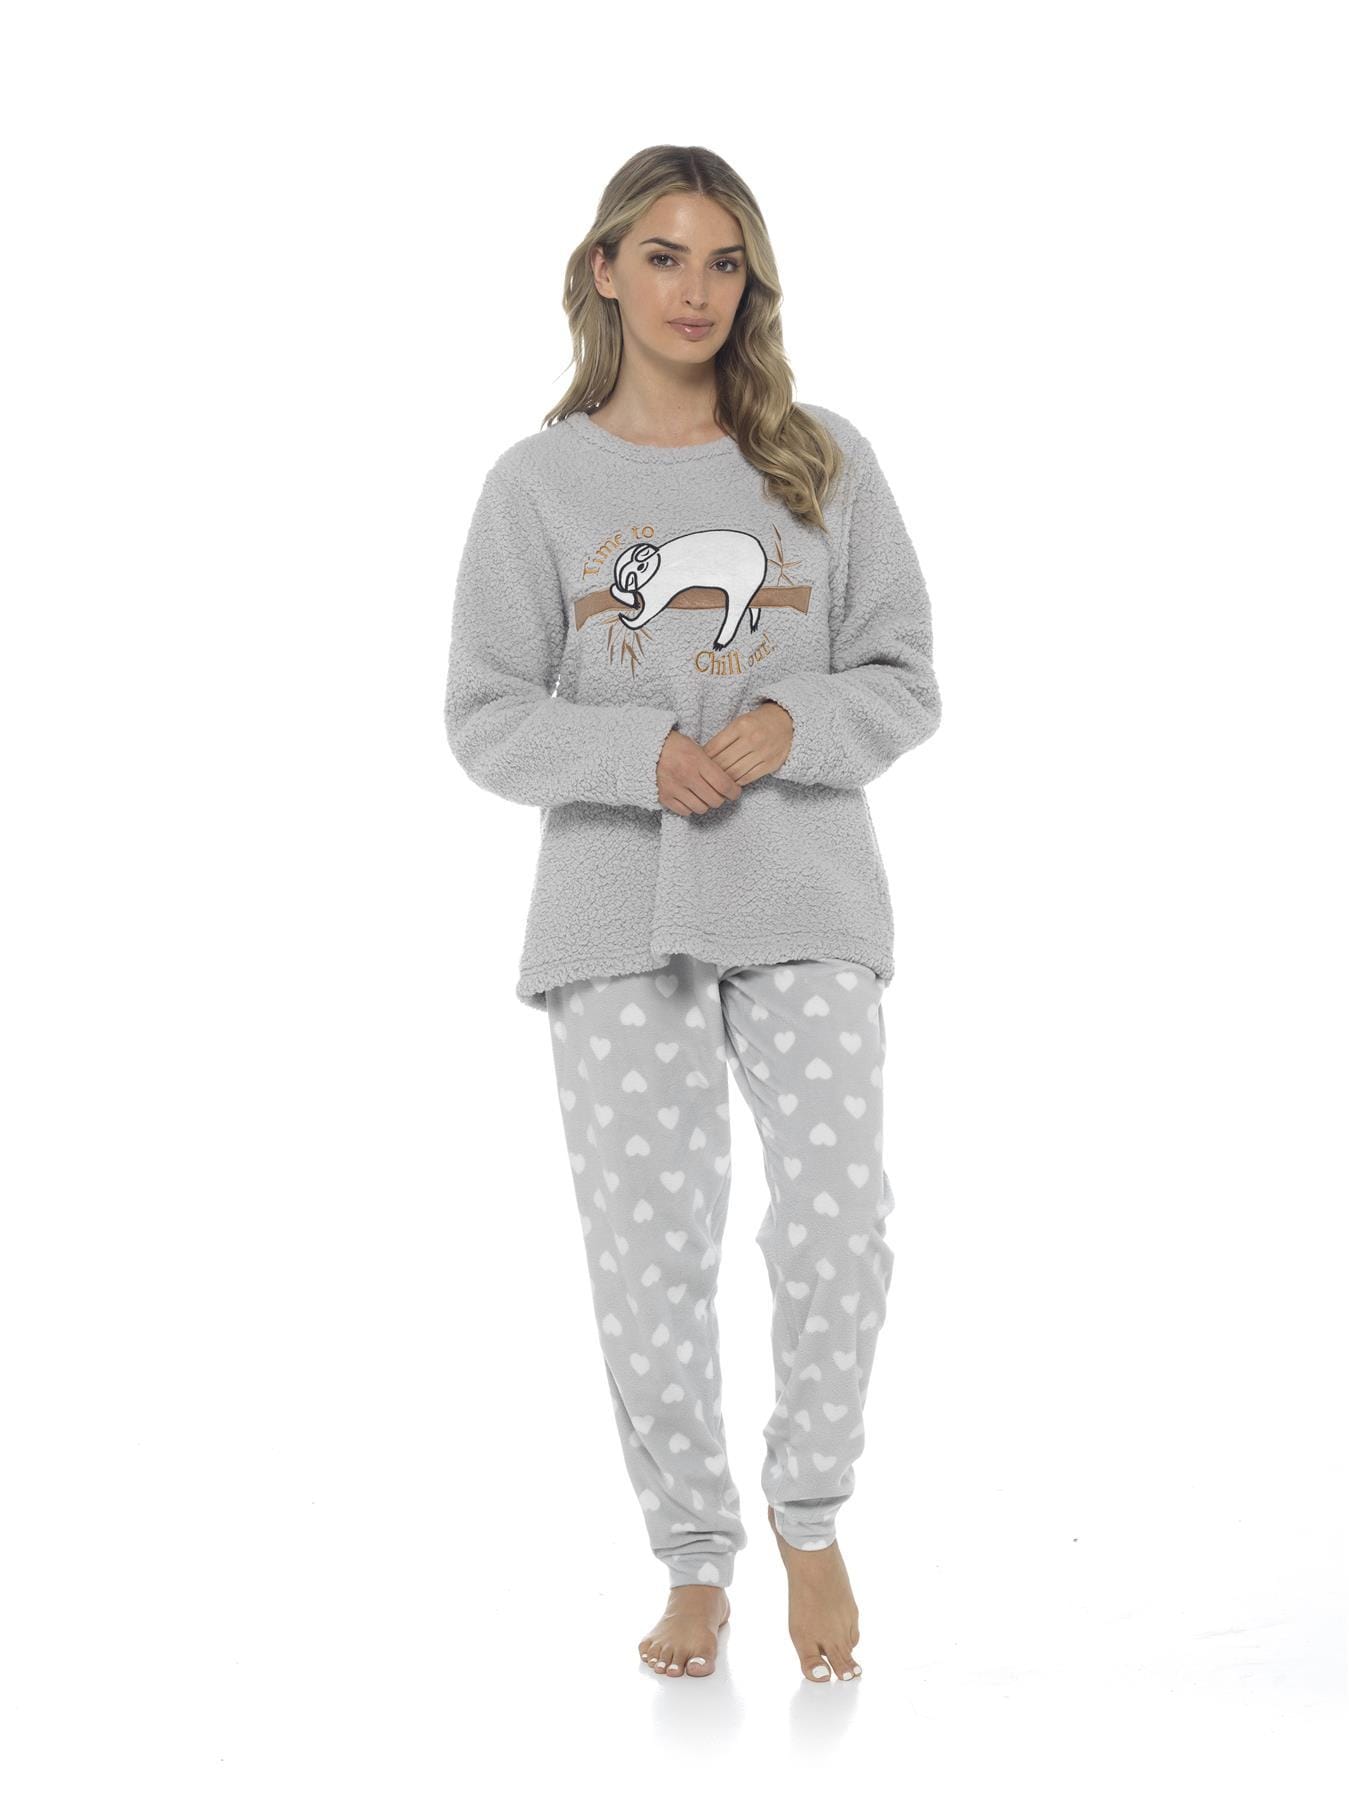 Women's Sloth Snuggle Teddy Fleece Pyjama Set, Ladies Cosy Nightwear